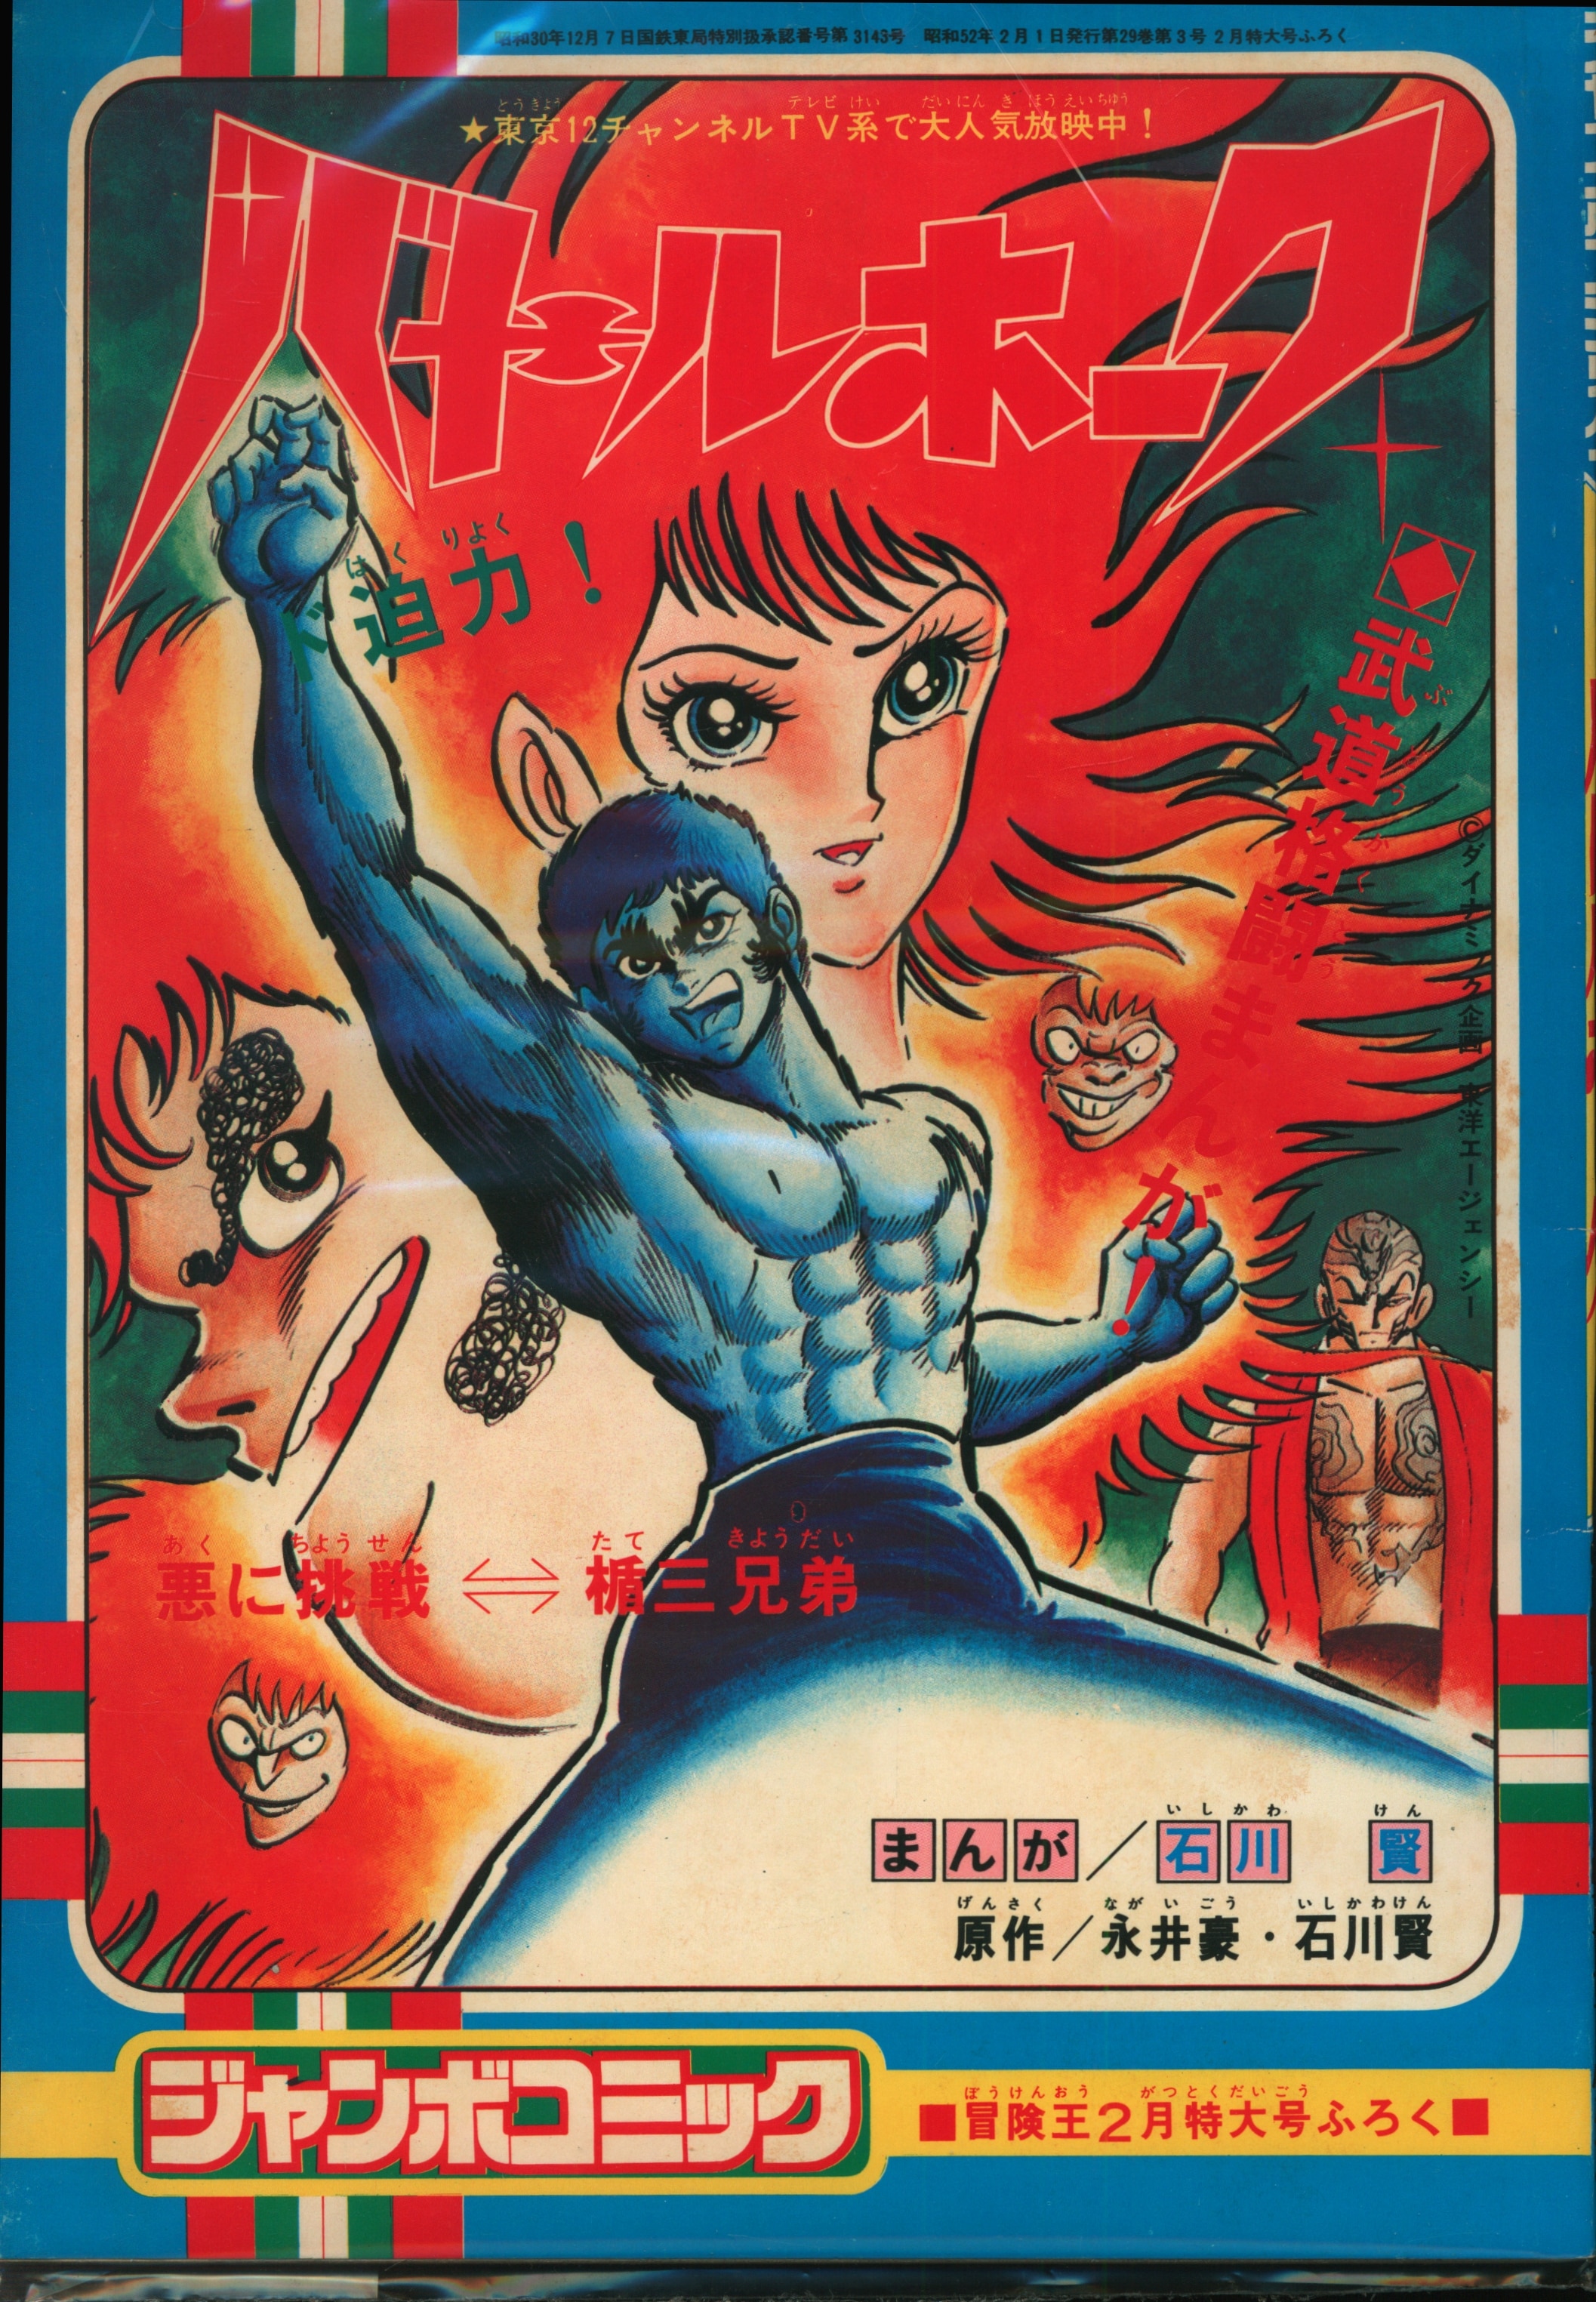 Akita Shoten Boken Oh Ken Ishikawa Battle Hawk Jumbo Comics S52 02 52 Mandarake Online Shop